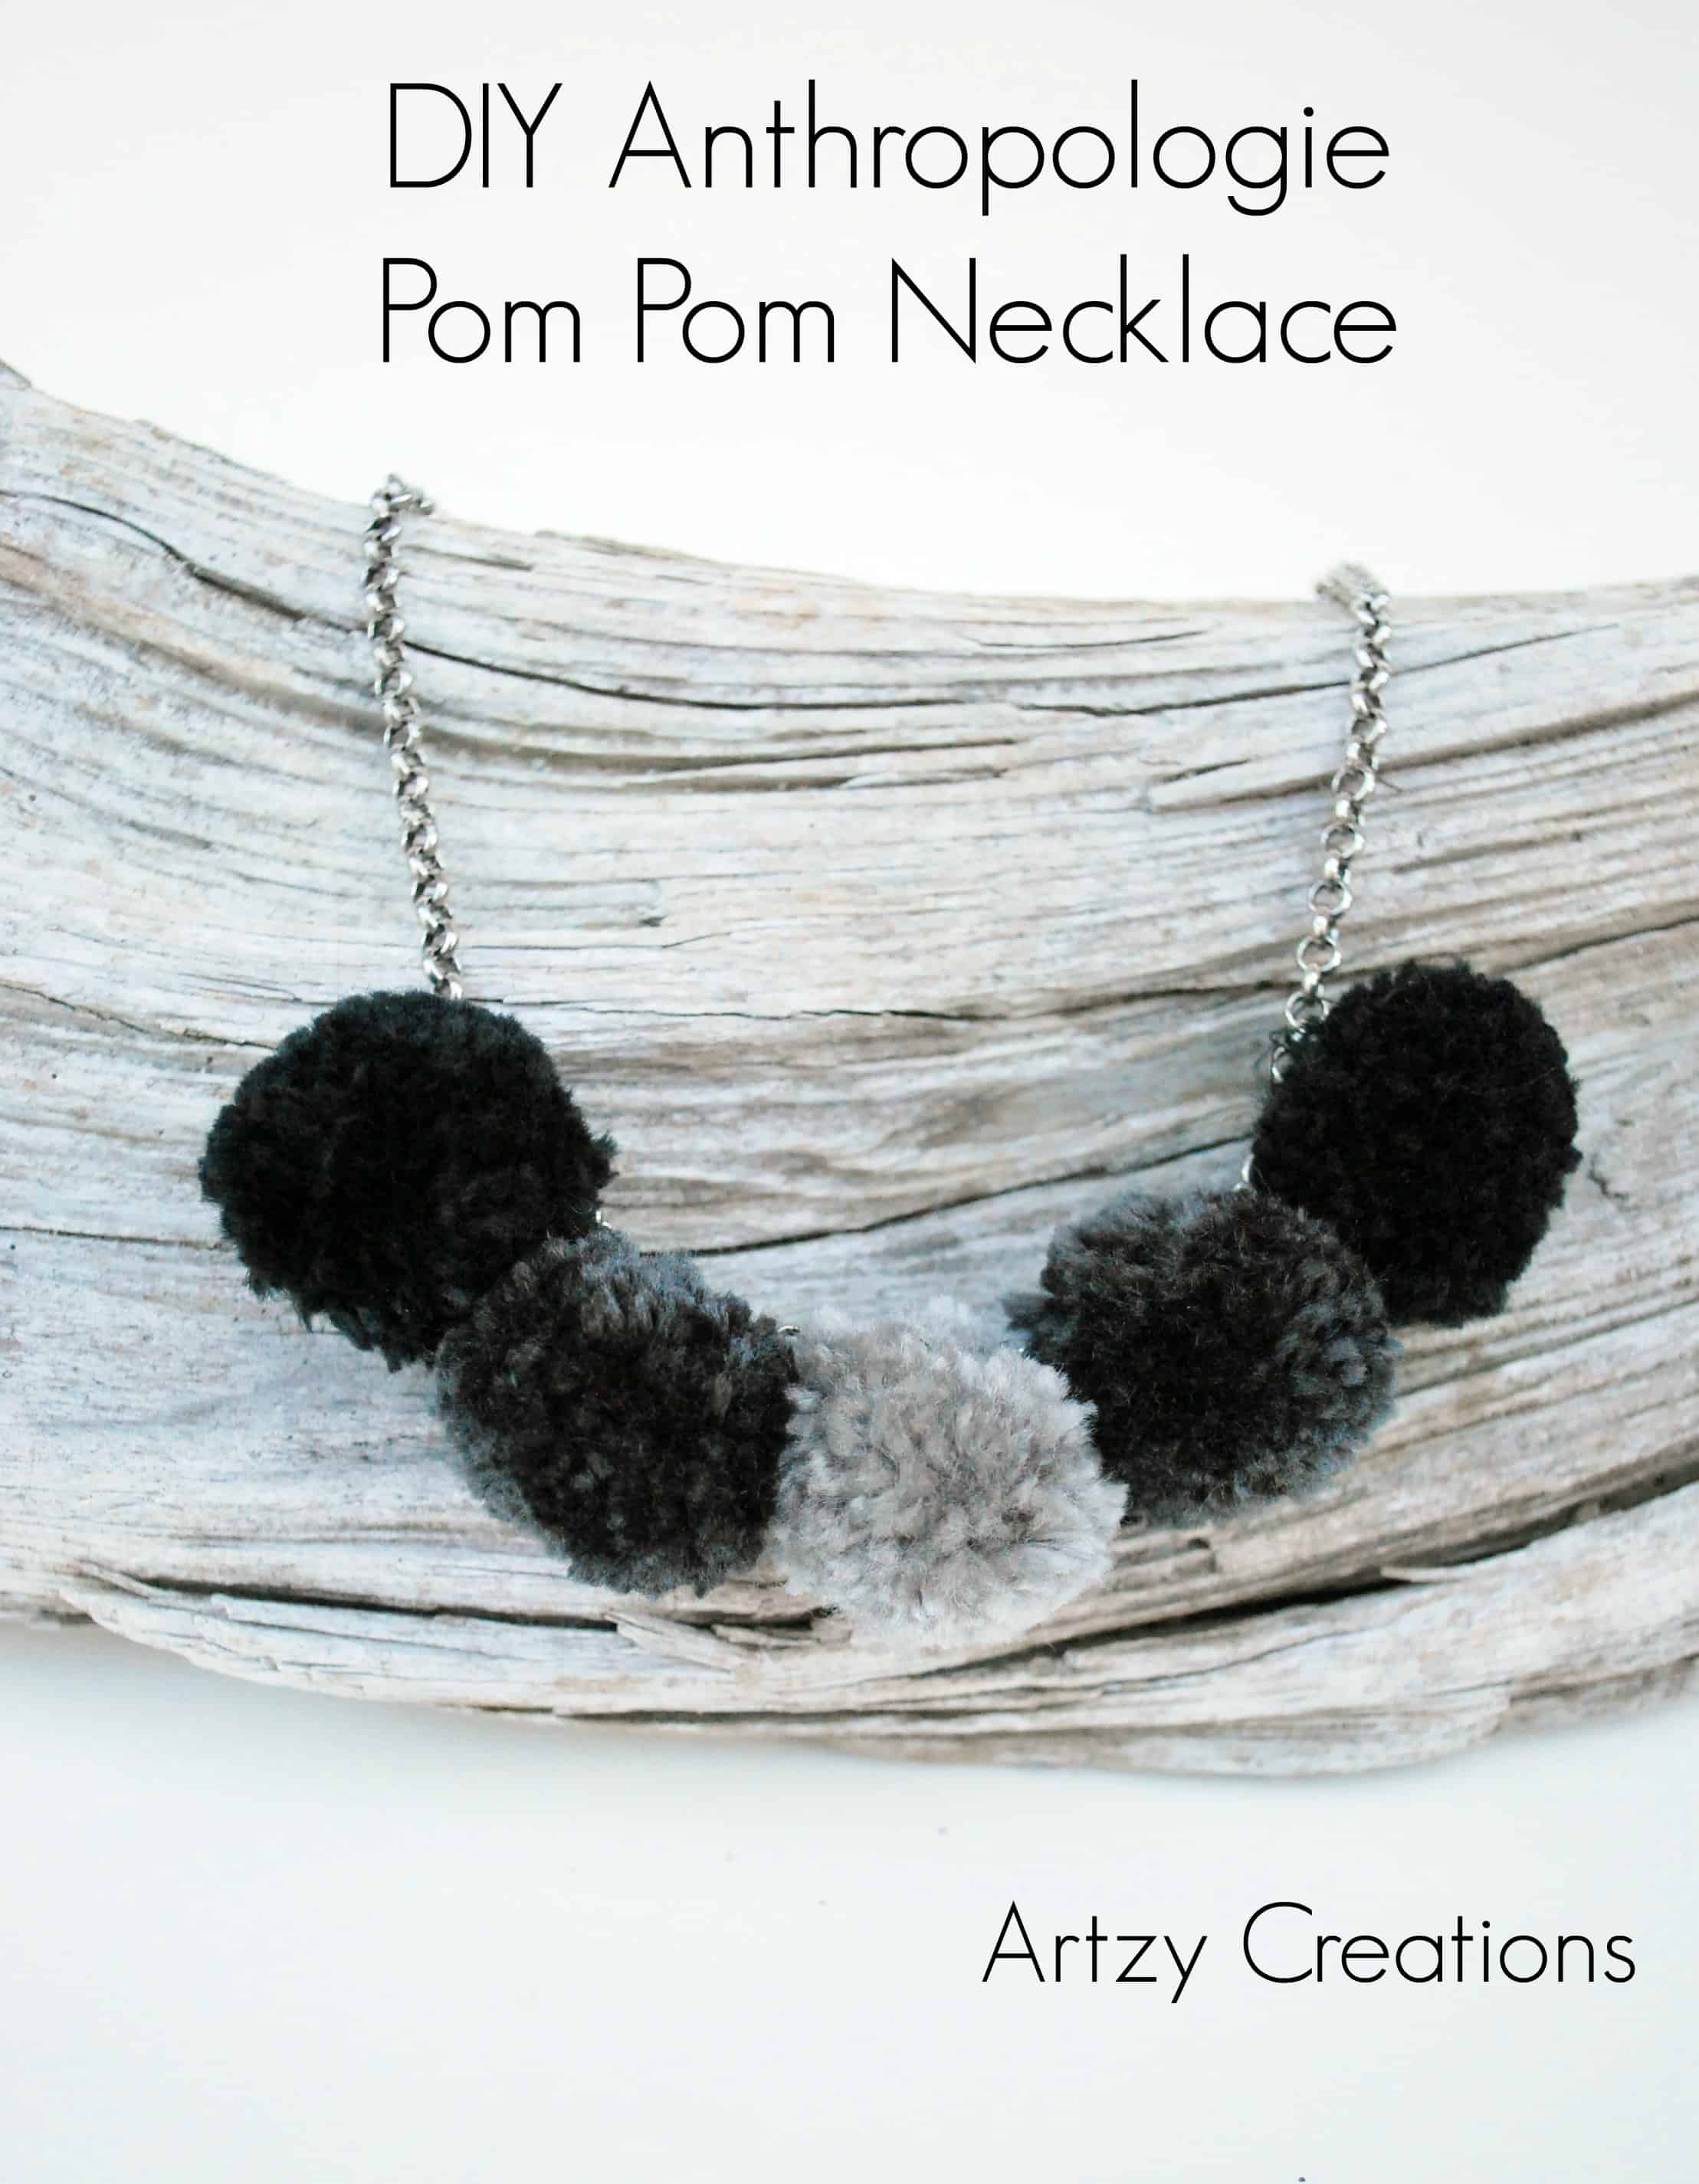 Anthrpologie inspired gray scale pom pom necklace